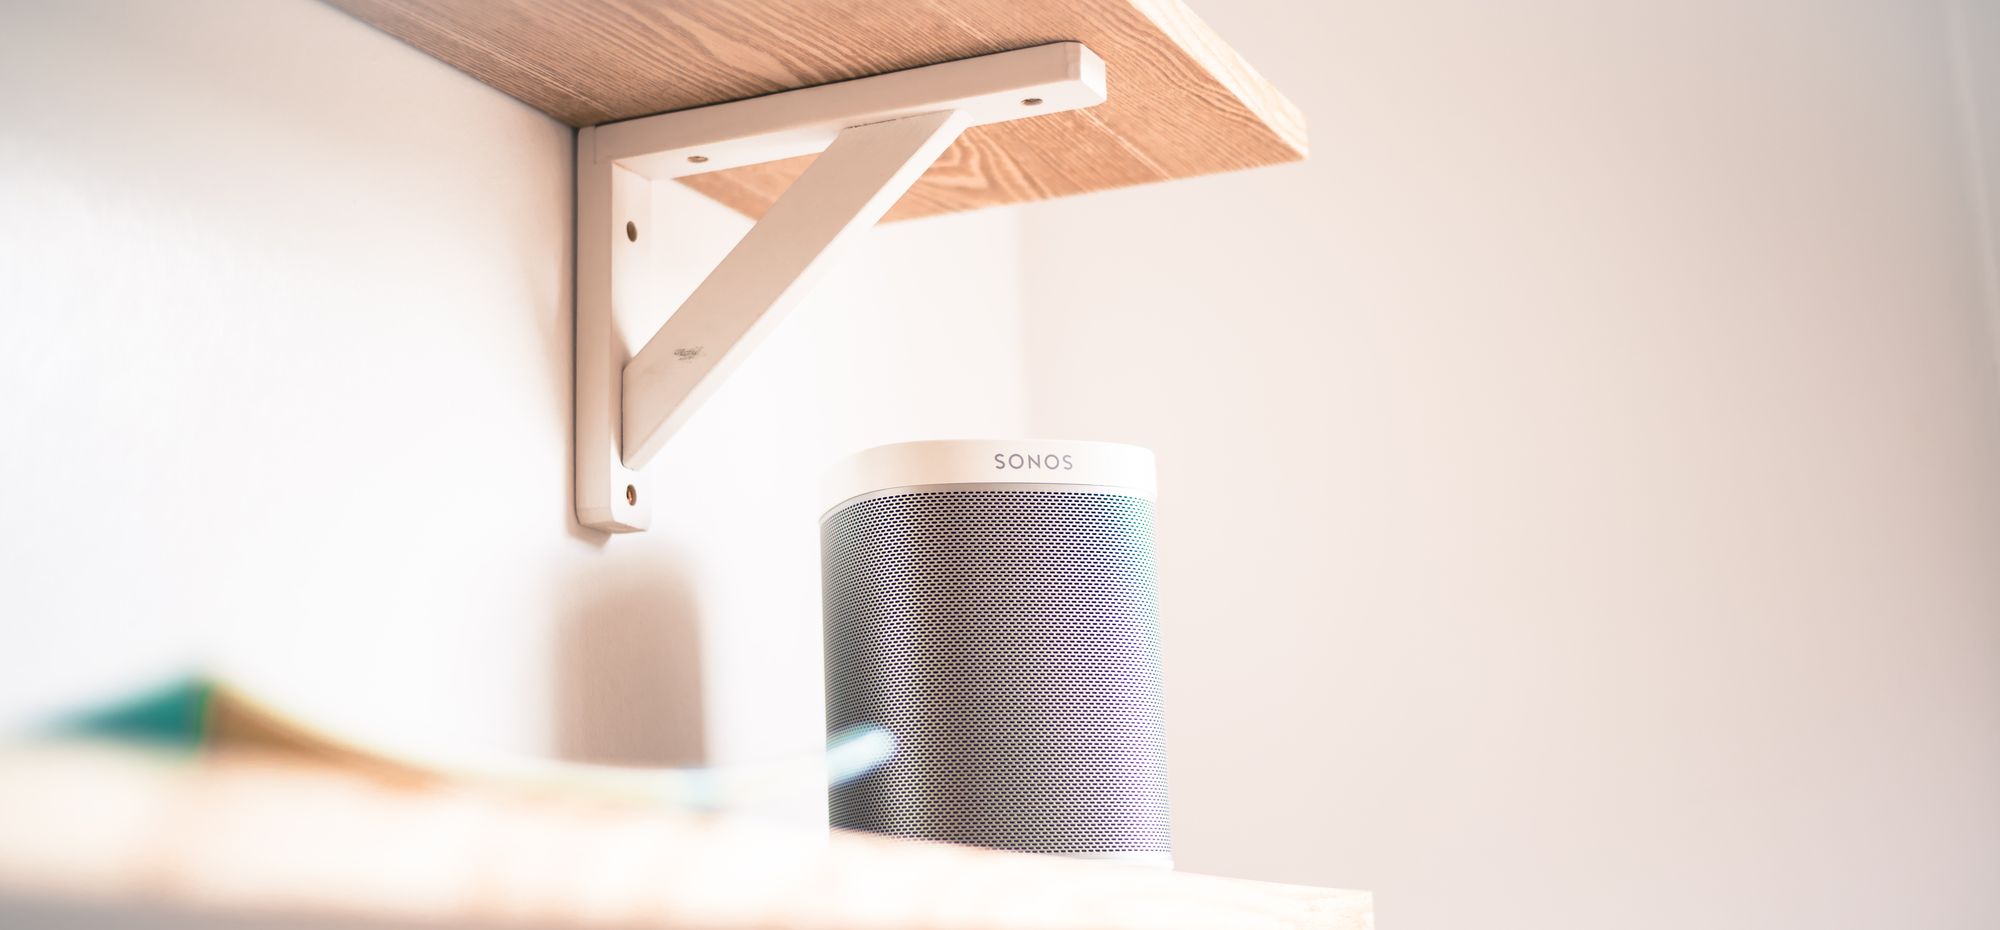 A Sonos Play One device under a shelf